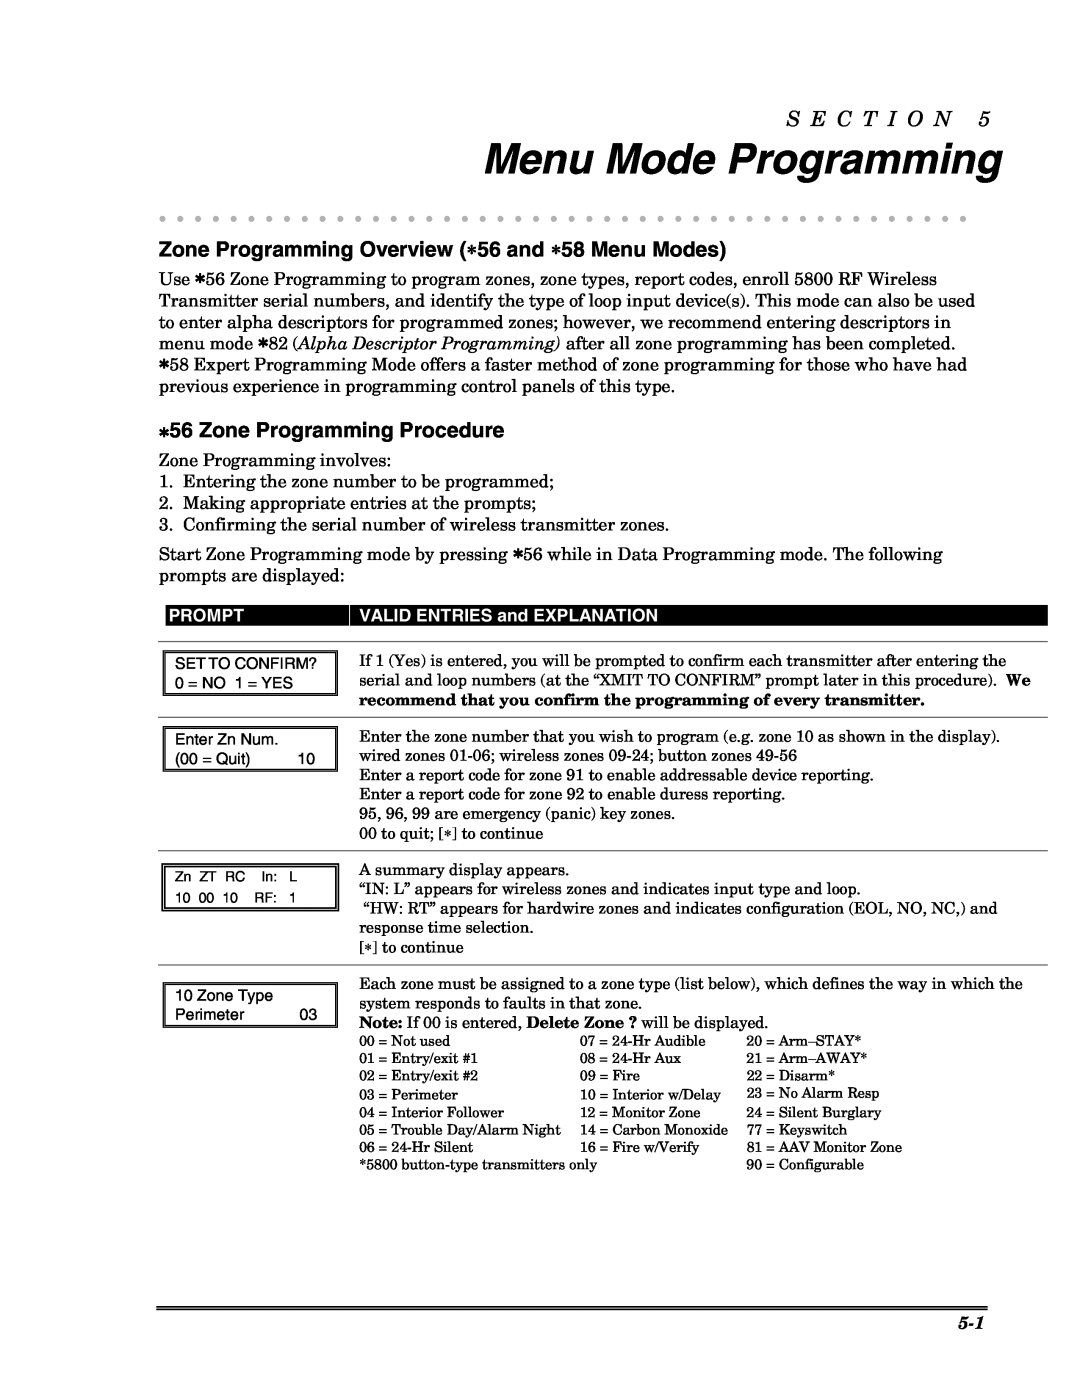 Honeywell VISTA-10PSIA Menu Mode Programming, Zone Programming Overview ∗56 and ∗58 Menu Modes, Zone Programming Procedure 